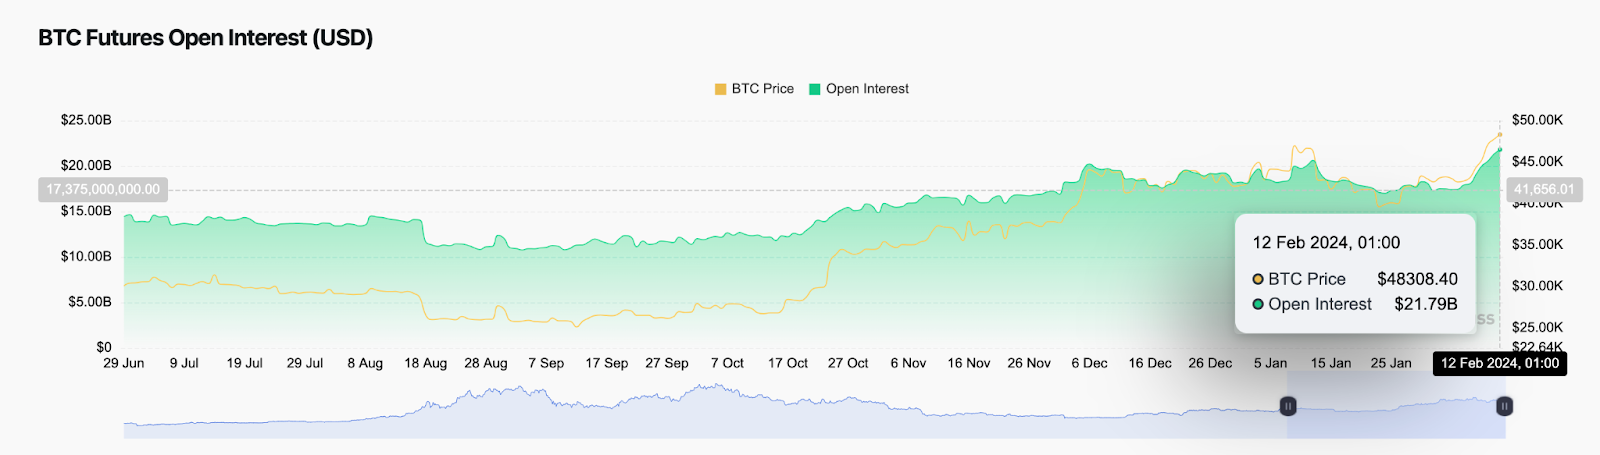 Bitcoin (BTC) Open Interest vs. Price 